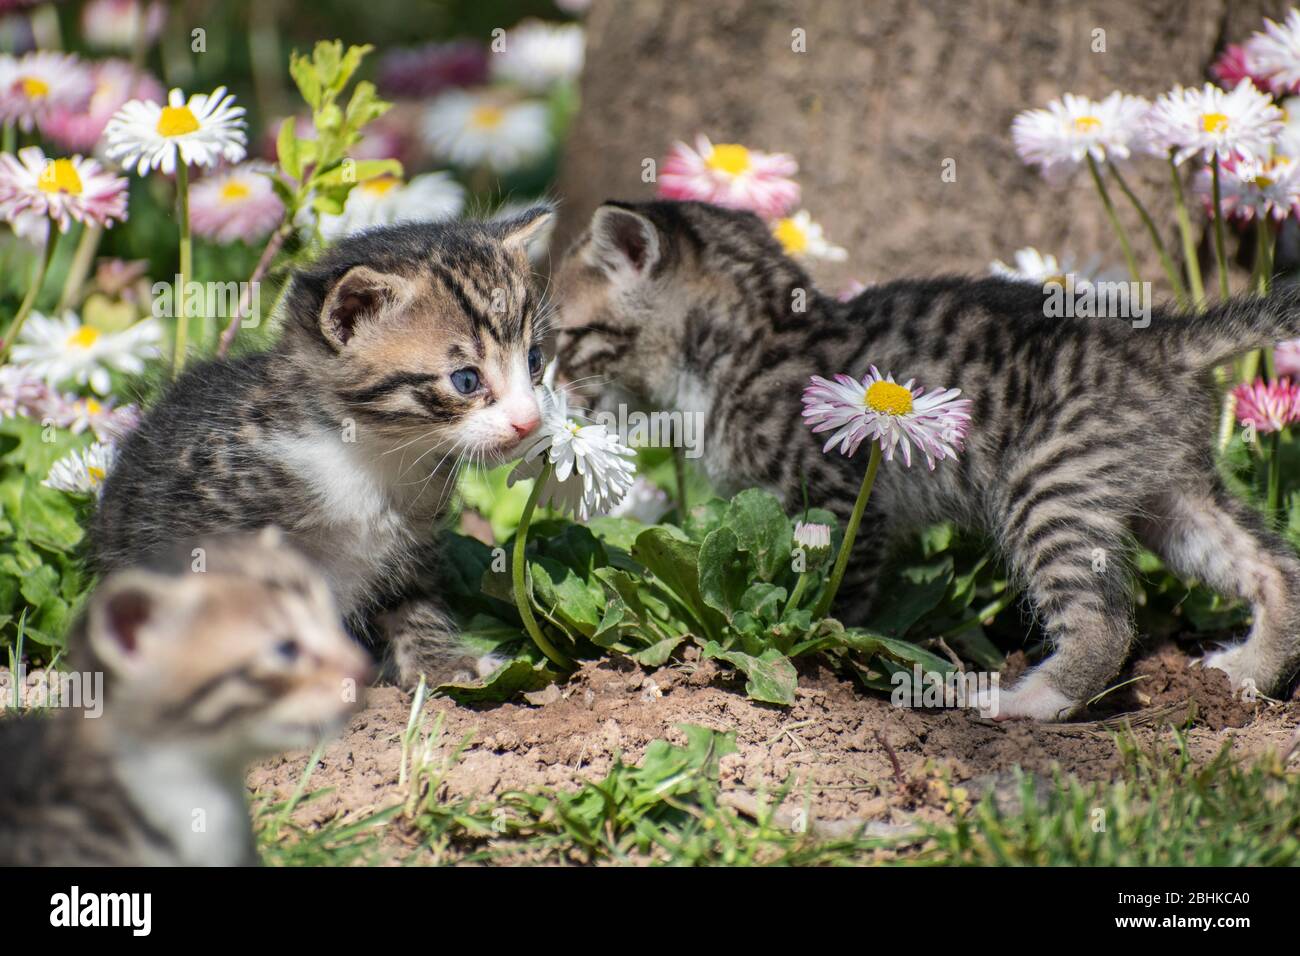 Cuccioli giovani, felis catus, nel giardino con fiori bellis perennis Foto Stock